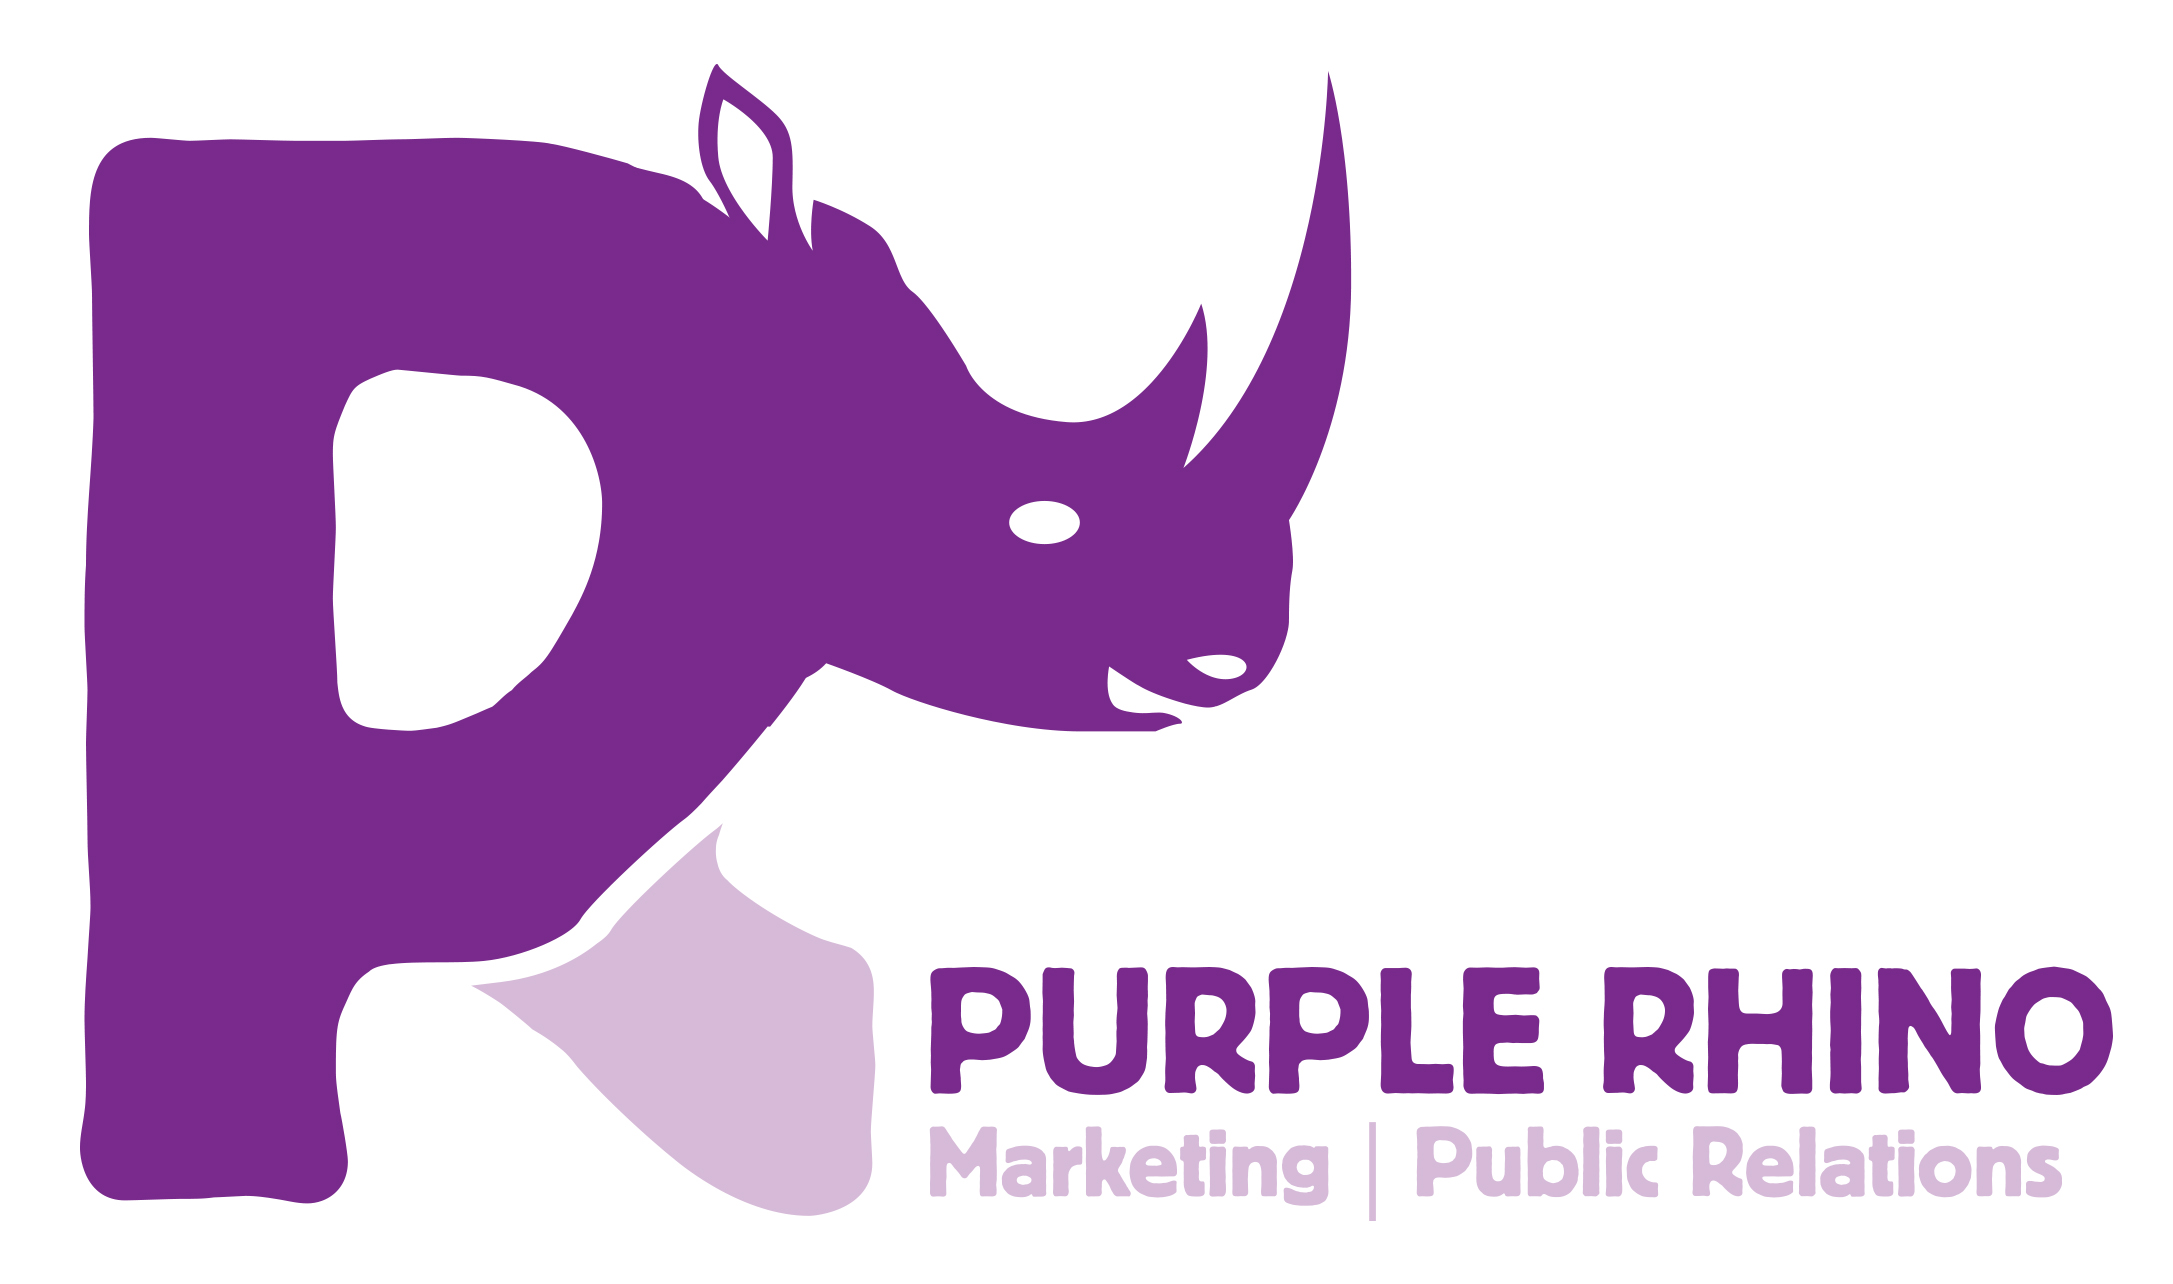 Purple rhino sarasota